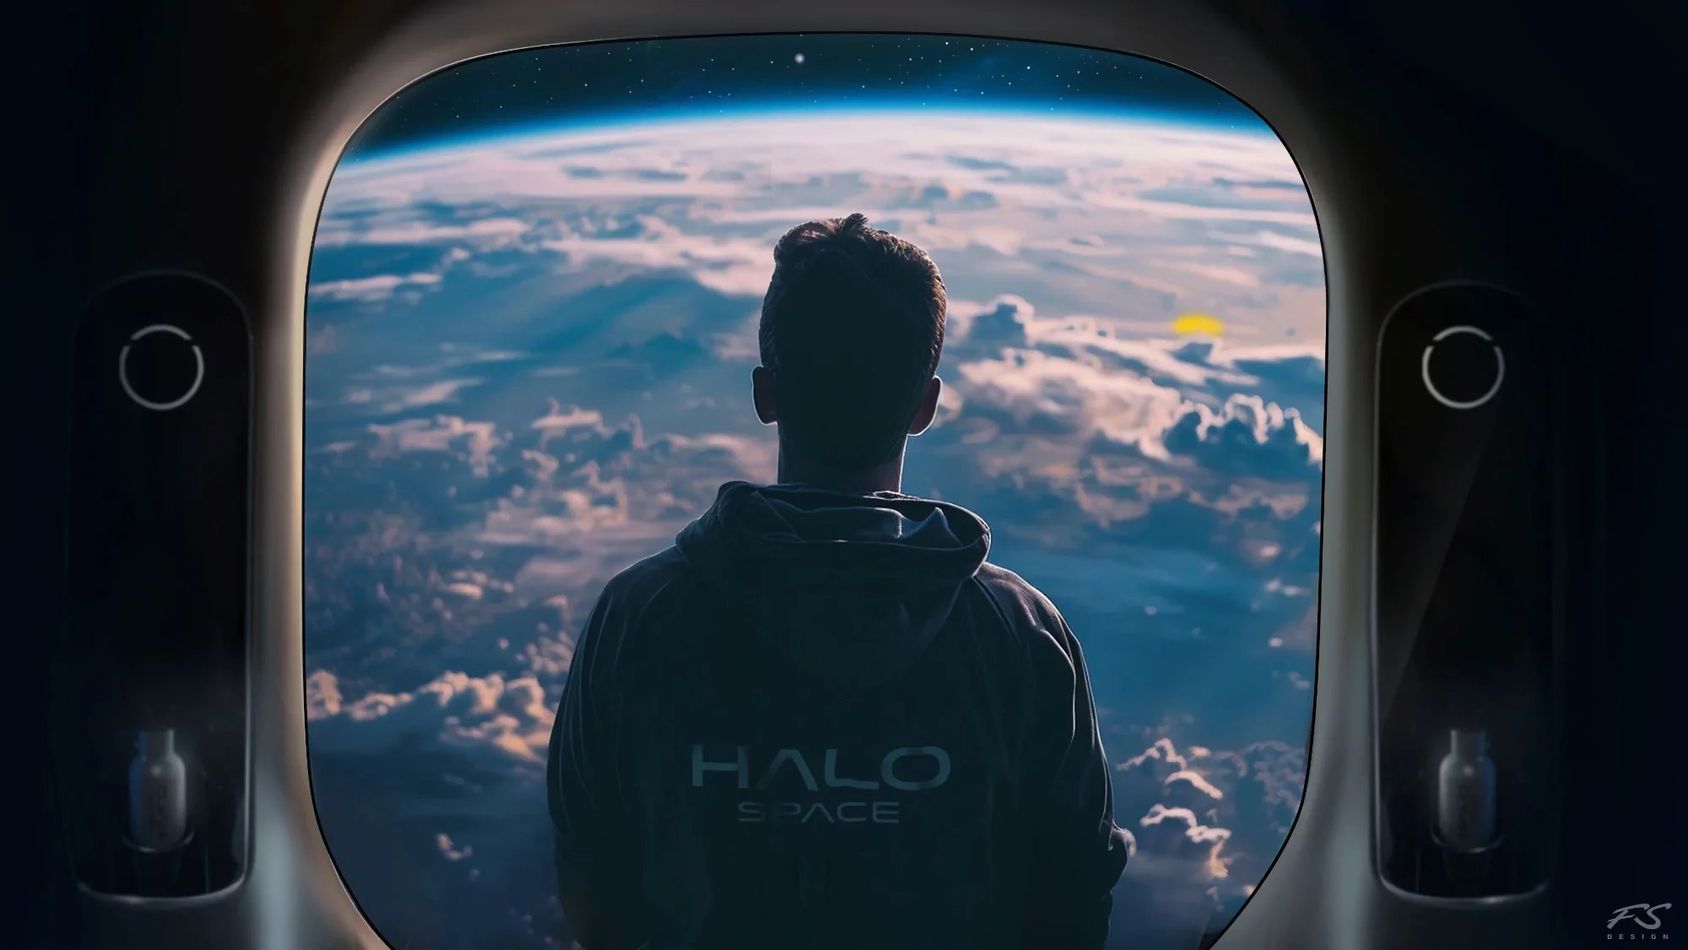 Halo Space presents balloon capsule